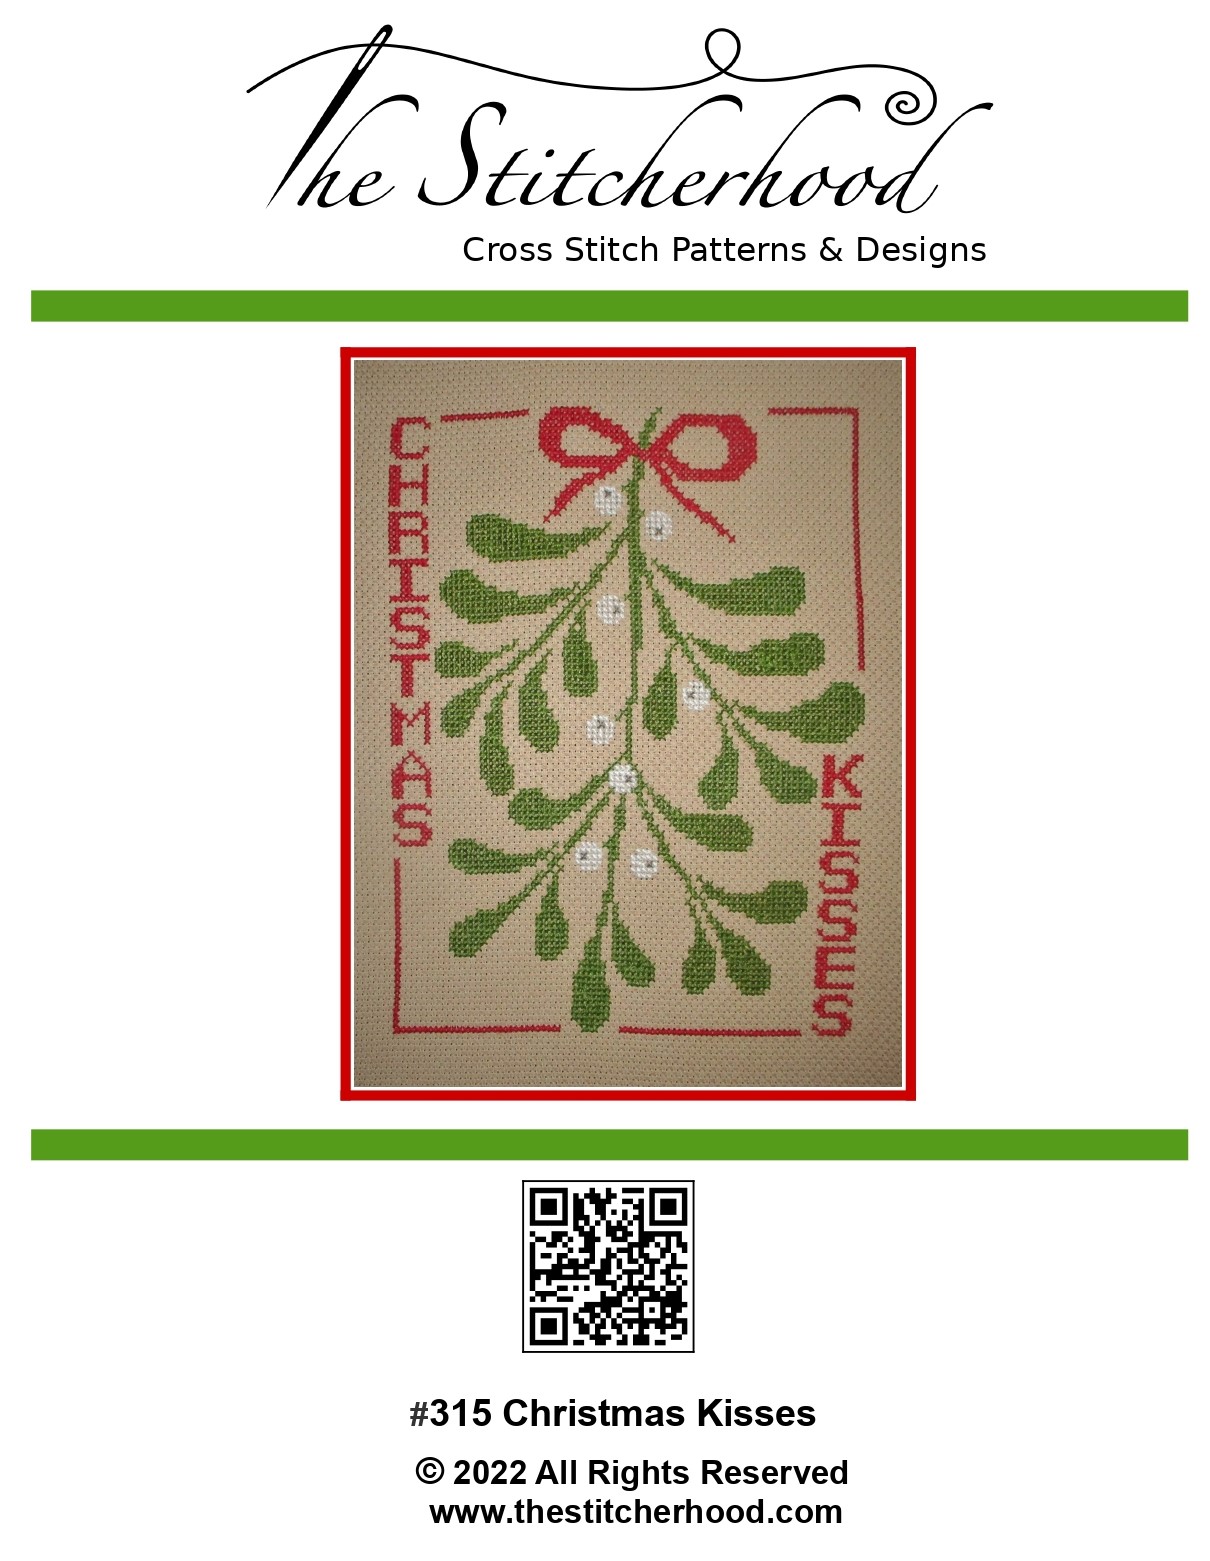 Christmas cross stitch design showing Mistletoe.